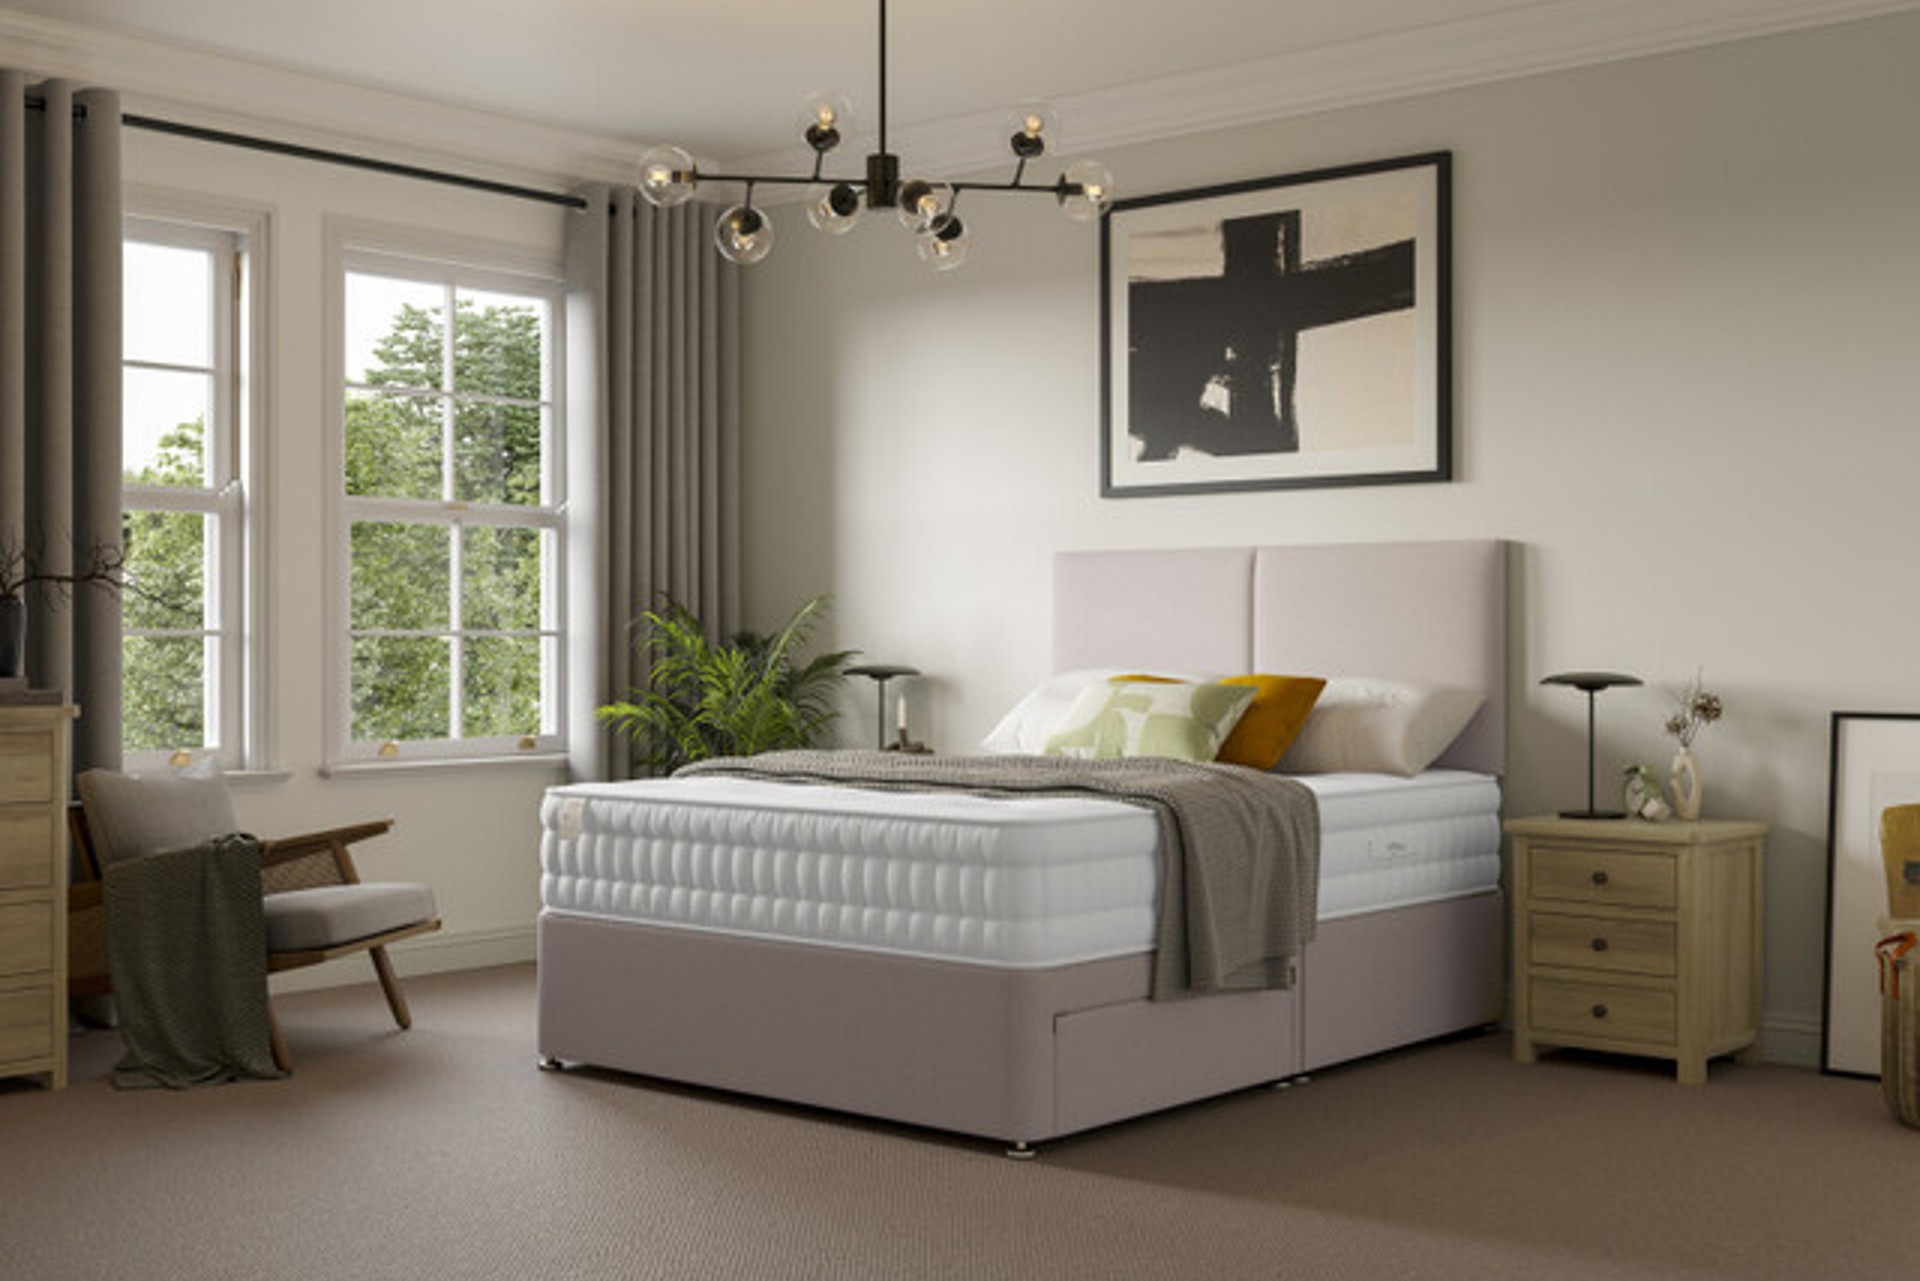 The slumberland Plant-based mattress on a grey divan bed in a modern minimalist bedroom